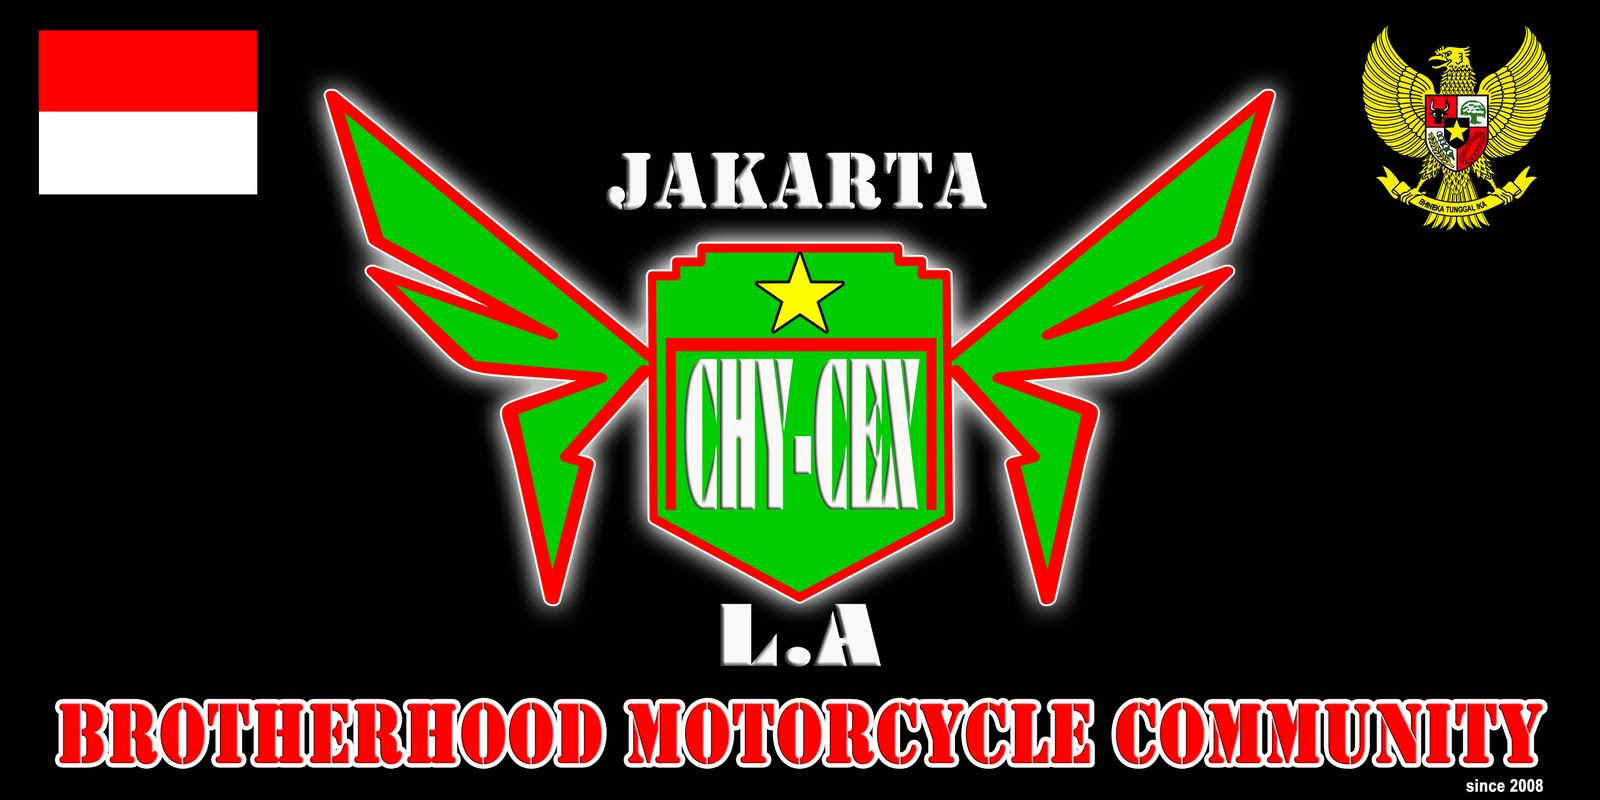 Panduan Safety CHY-CEX motor comunity JKT-L.A